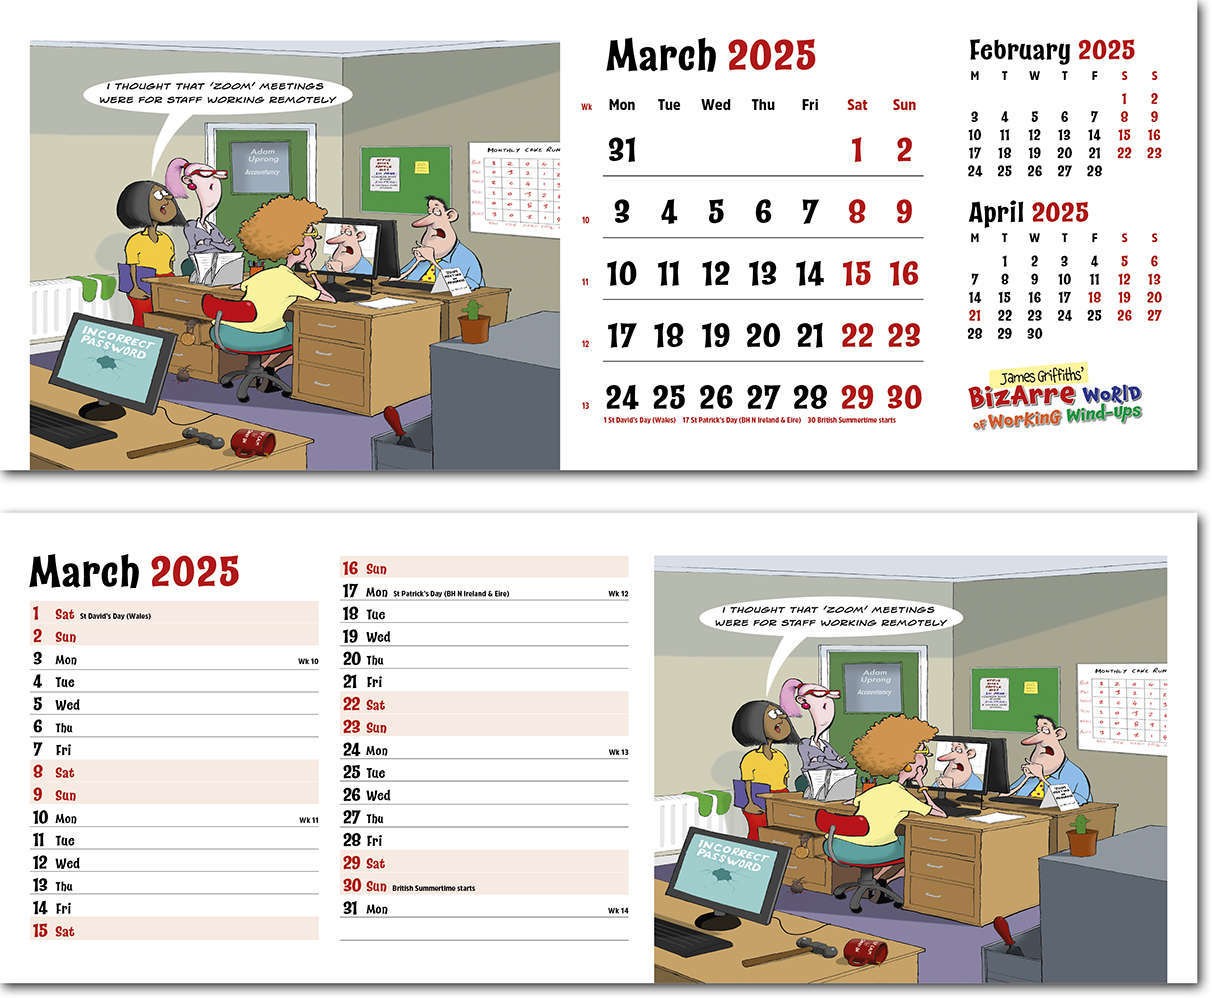 Bizarre World of Working Wind Ups Task Station Desk Calendar